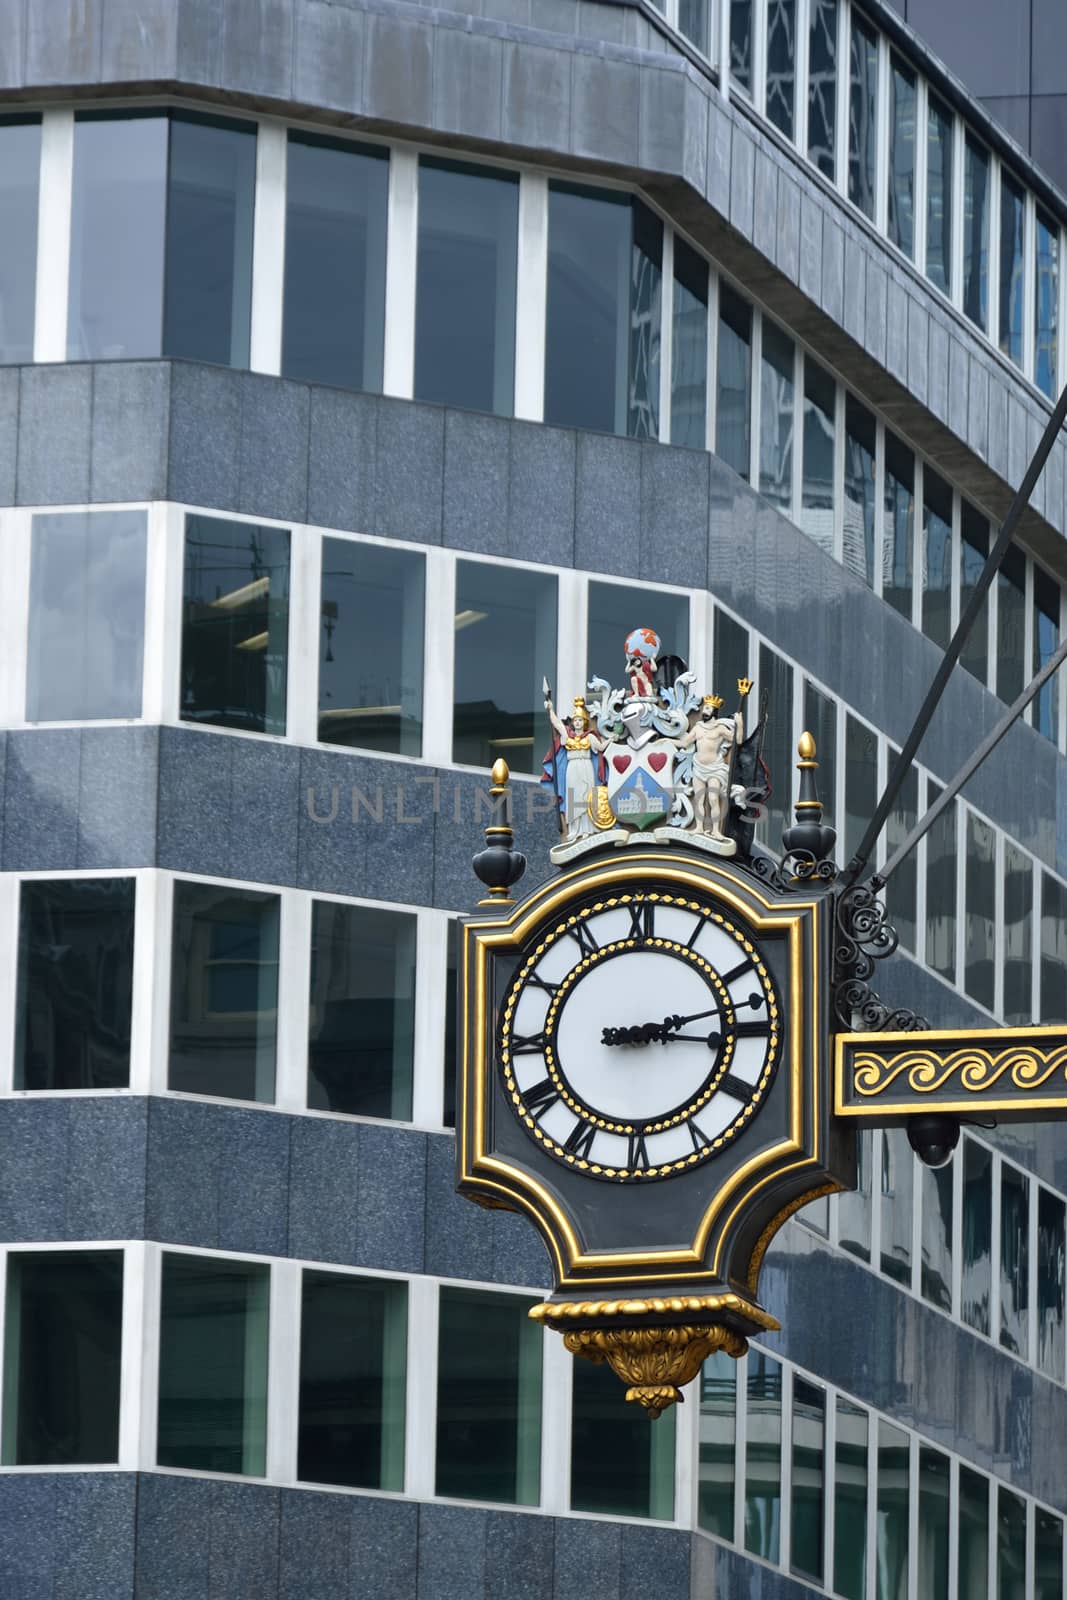 city of london street clock by pauws99